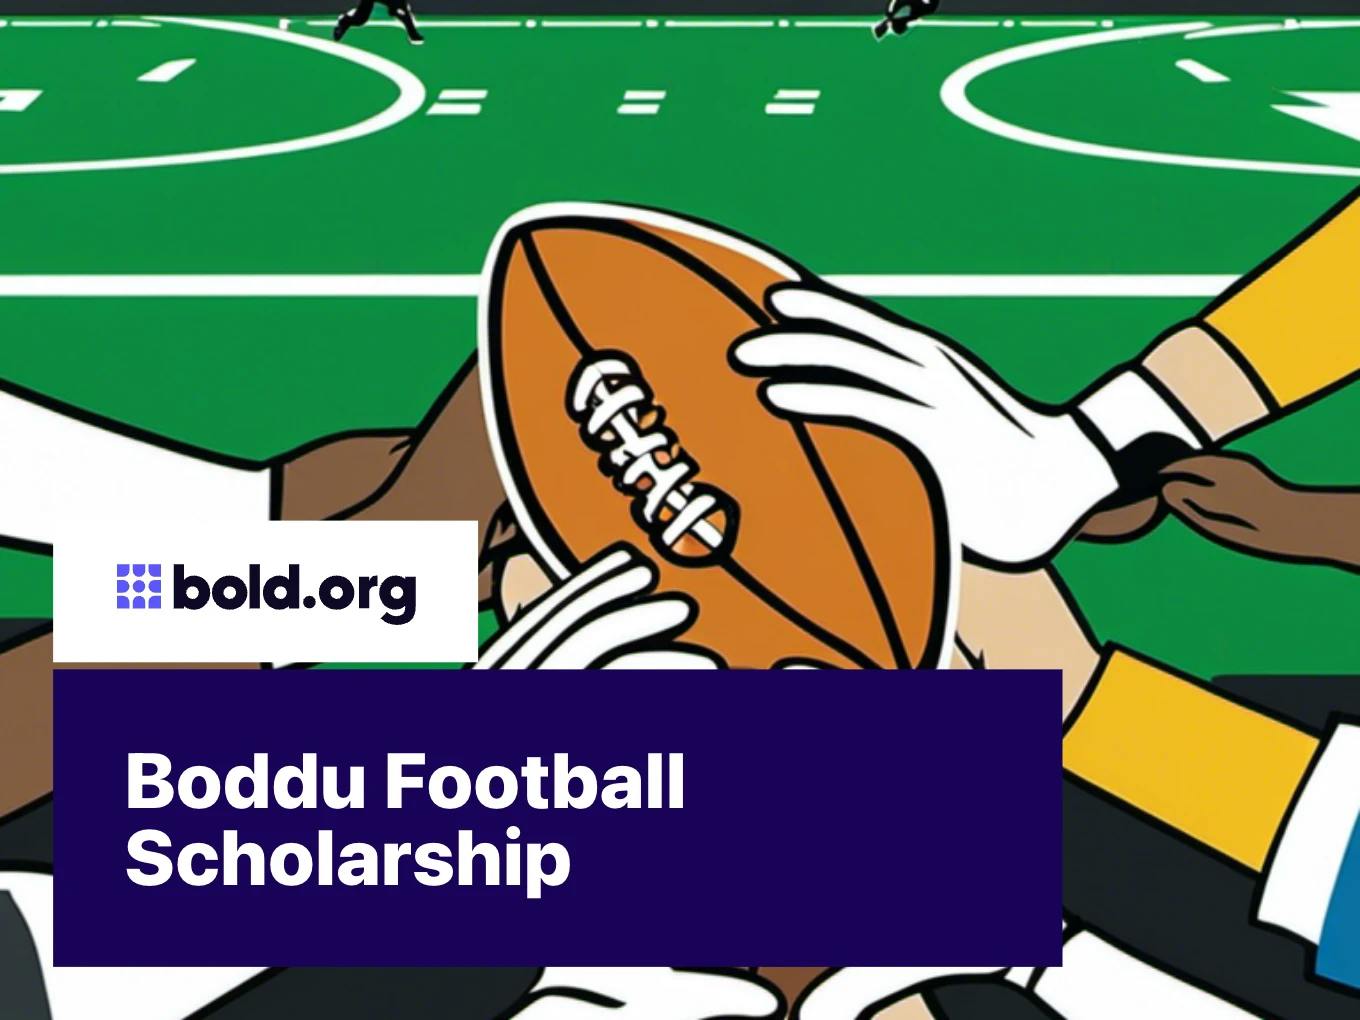 Boddu Football Scholarship